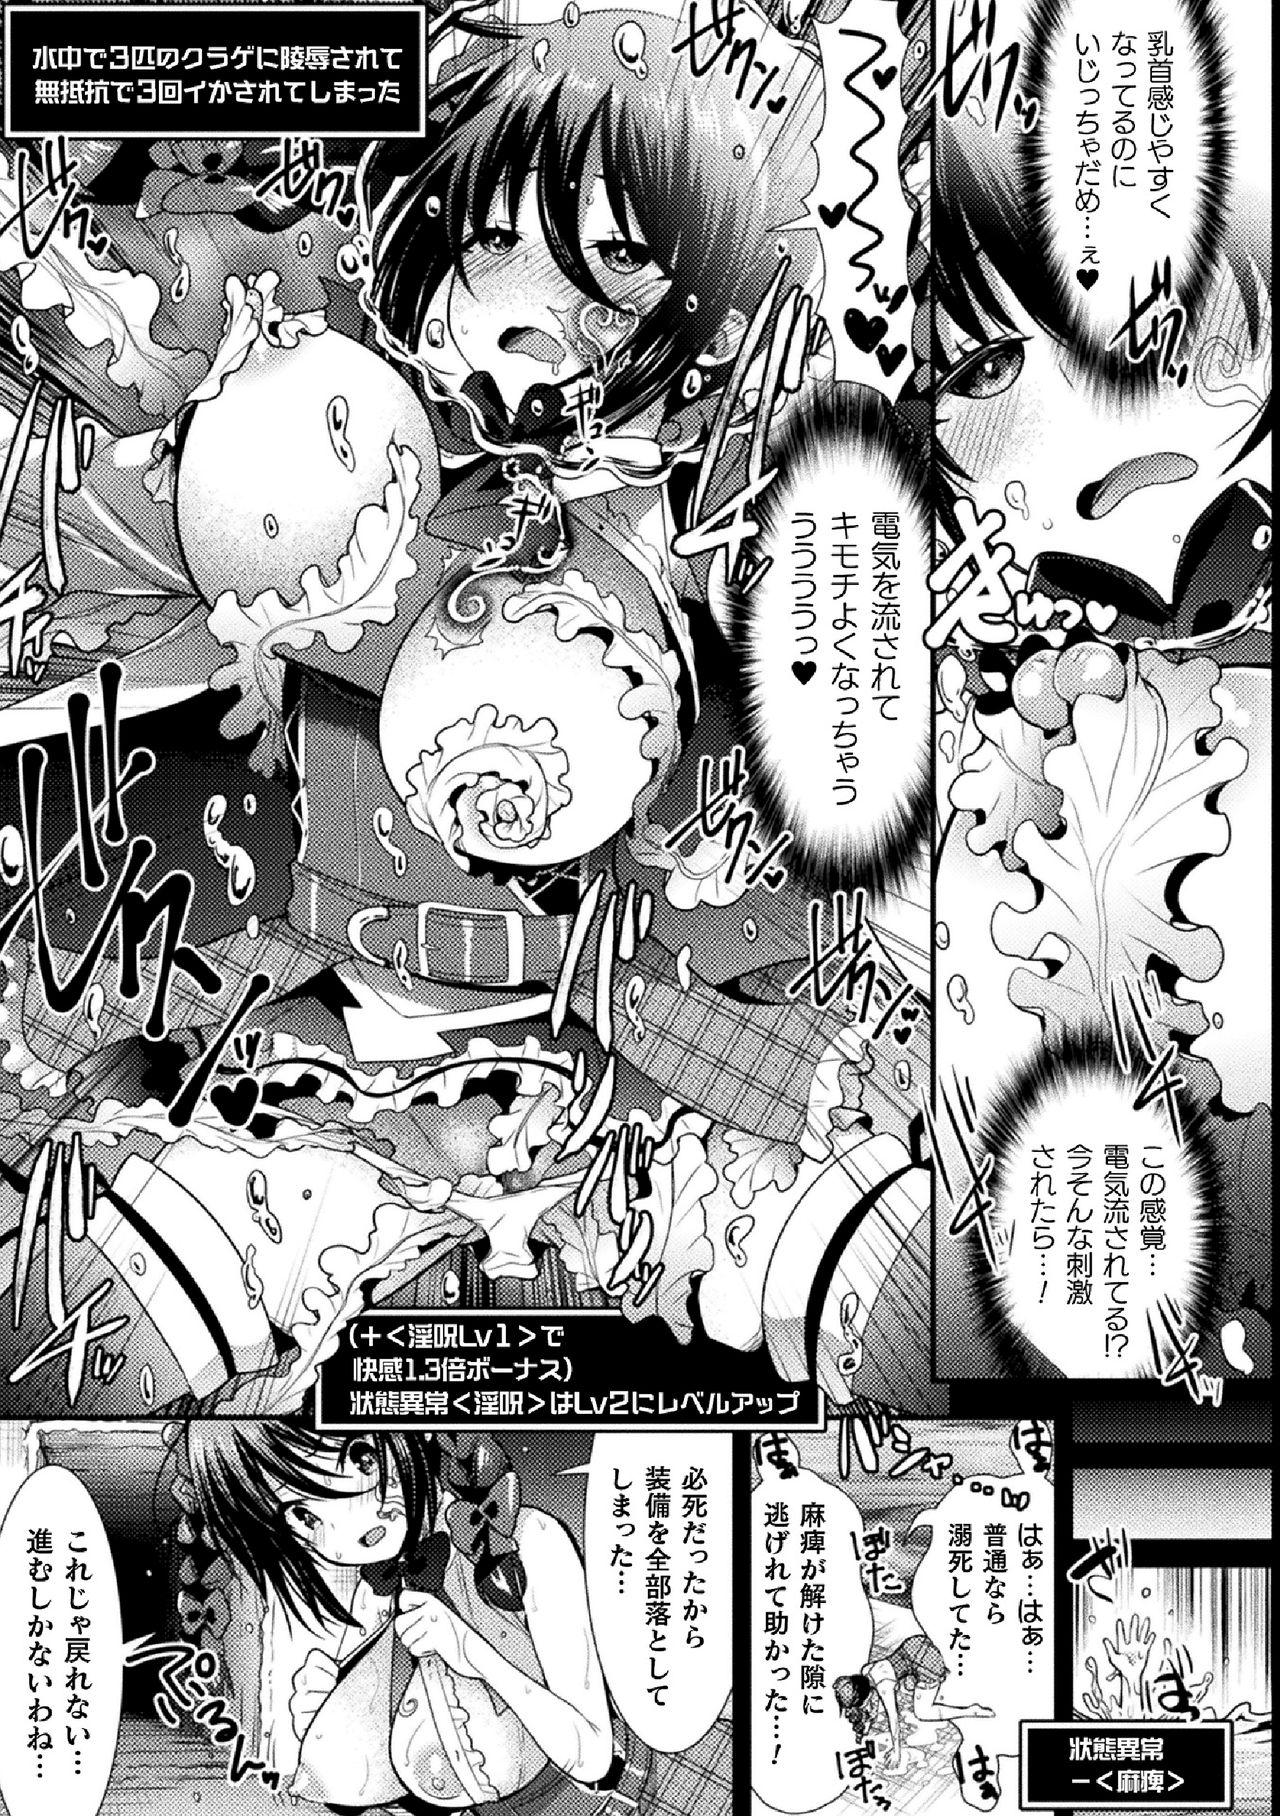 2D Comic Magazine Zecchou Kairaku ga Tomaranai Ero-Trap Dungeon Vol.2 30